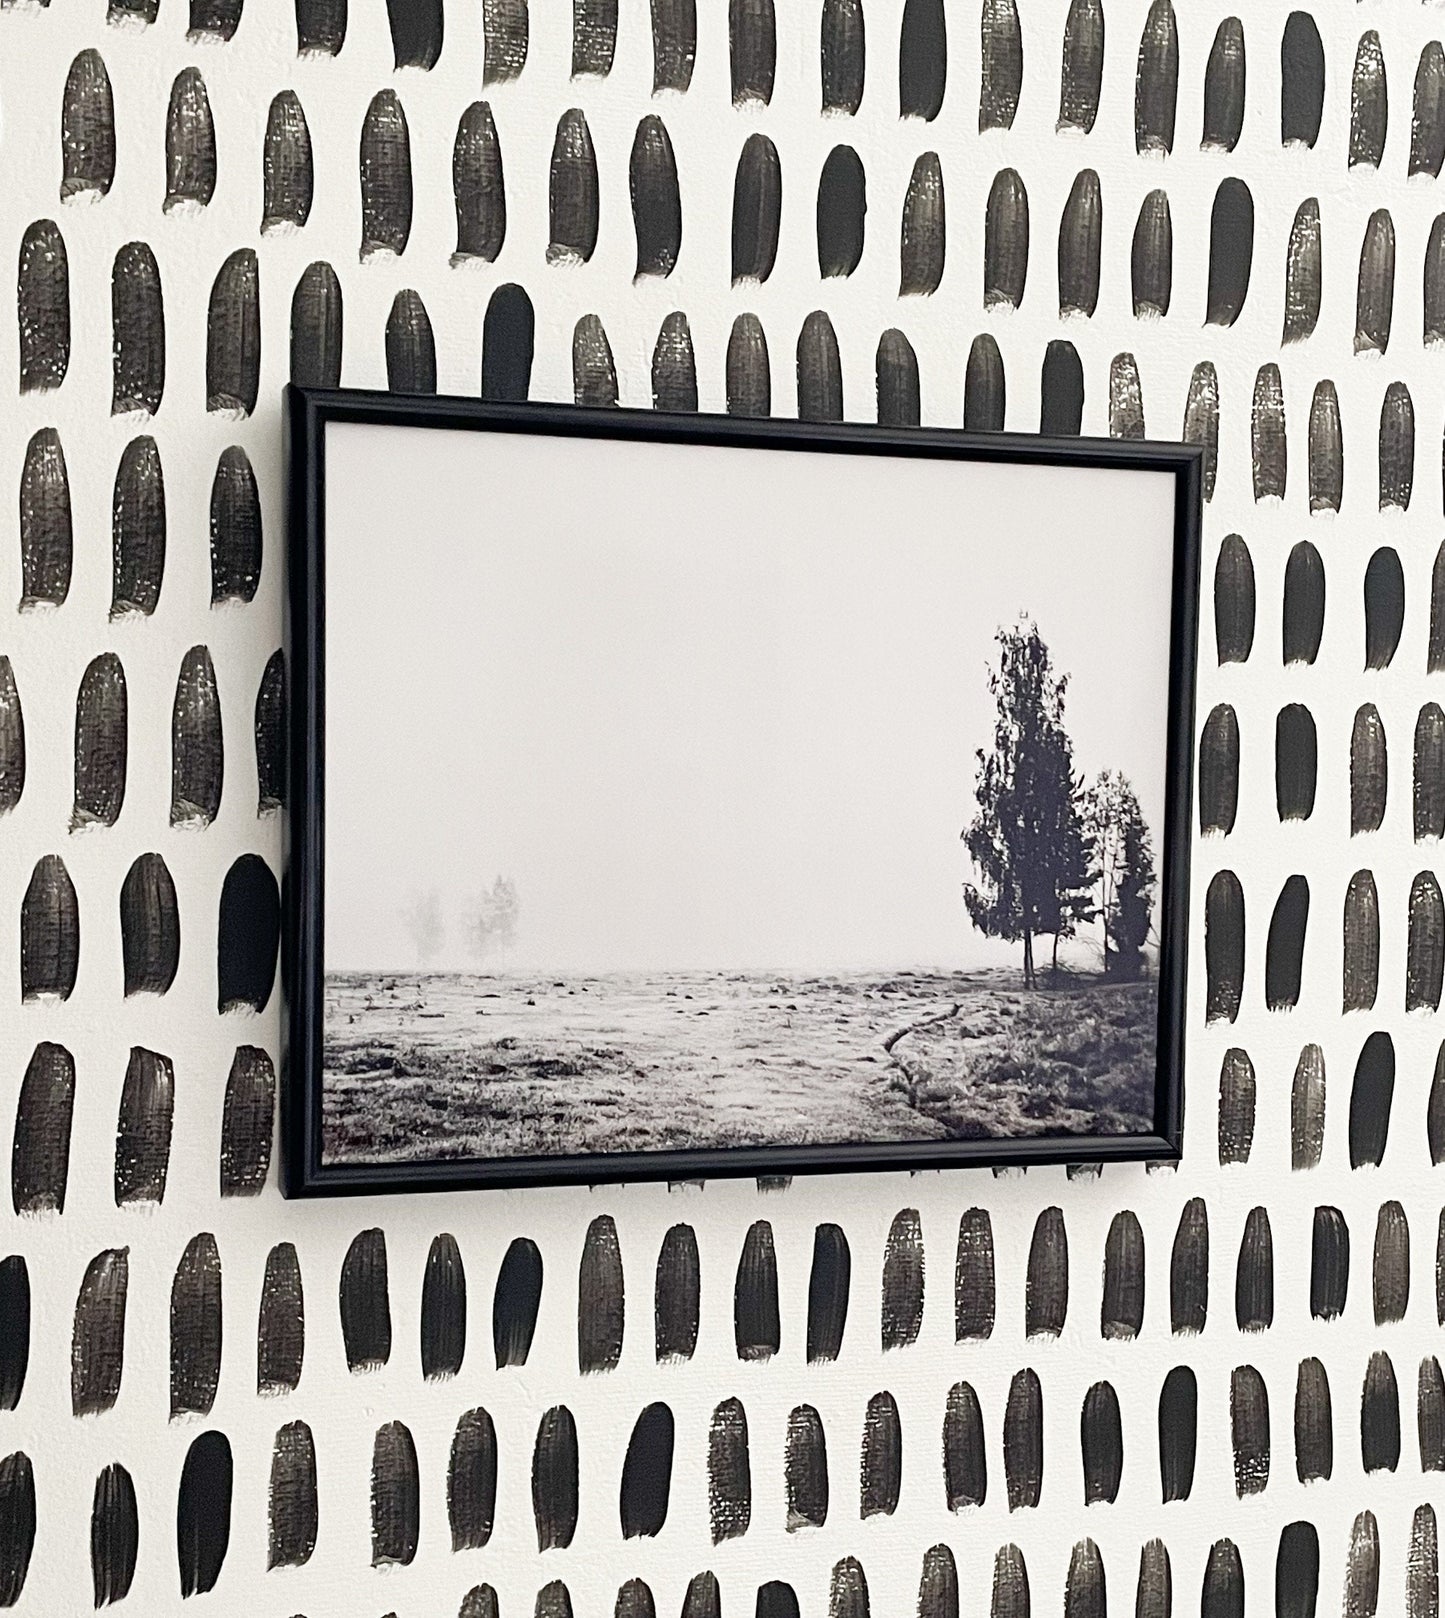 Black and White Landscape Photograph / Digital Download